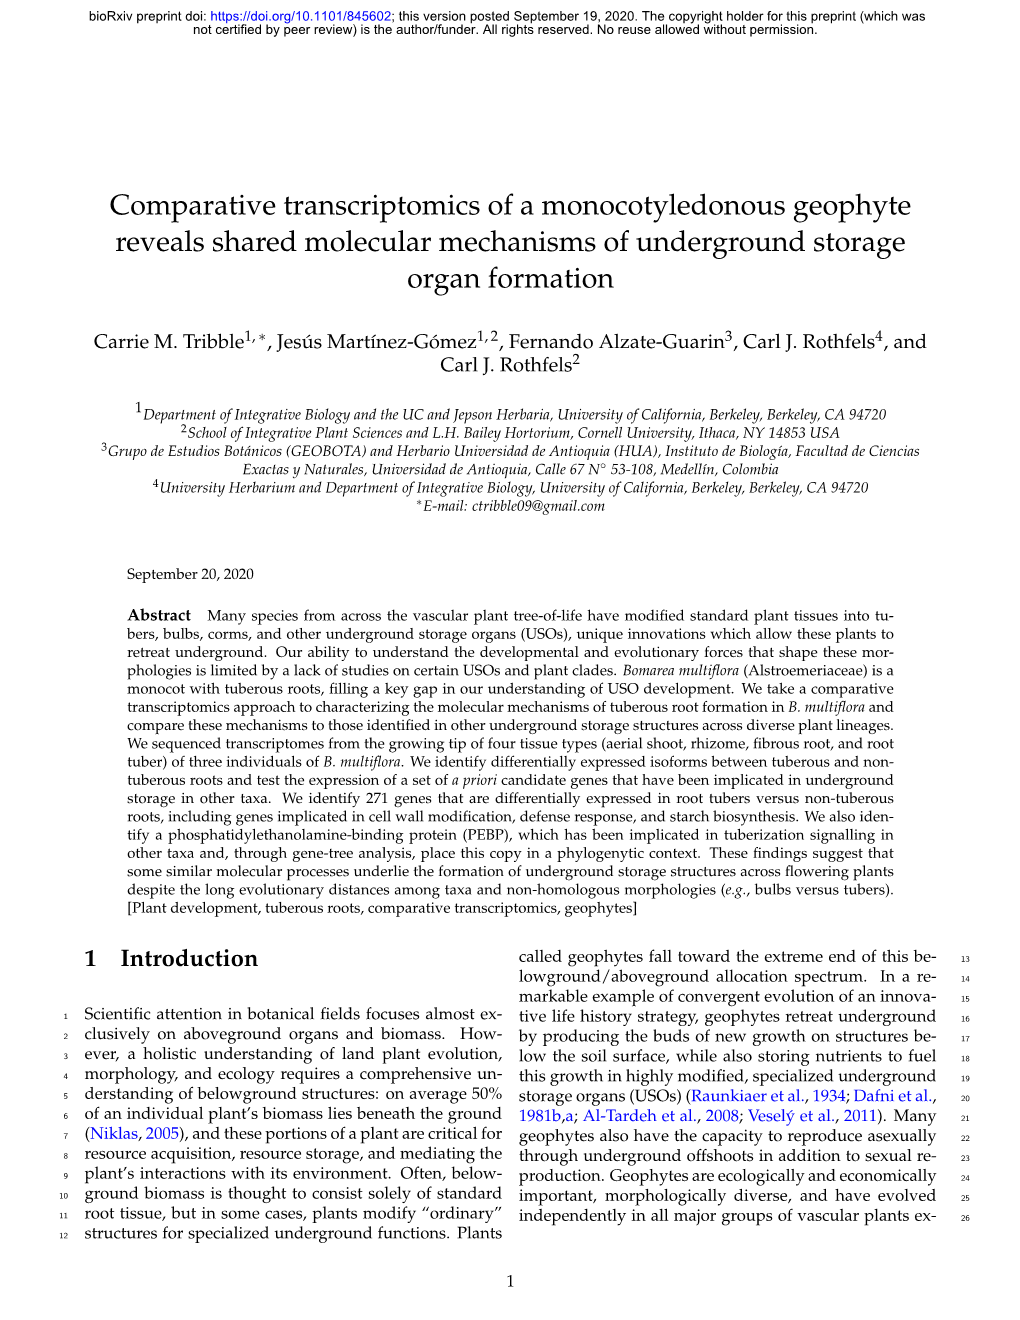 Comparative Transcriptomics of a Monocotyledonous Geophyte Reveals Shared Molecular Mechanisms of Underground Storage Organ Formation